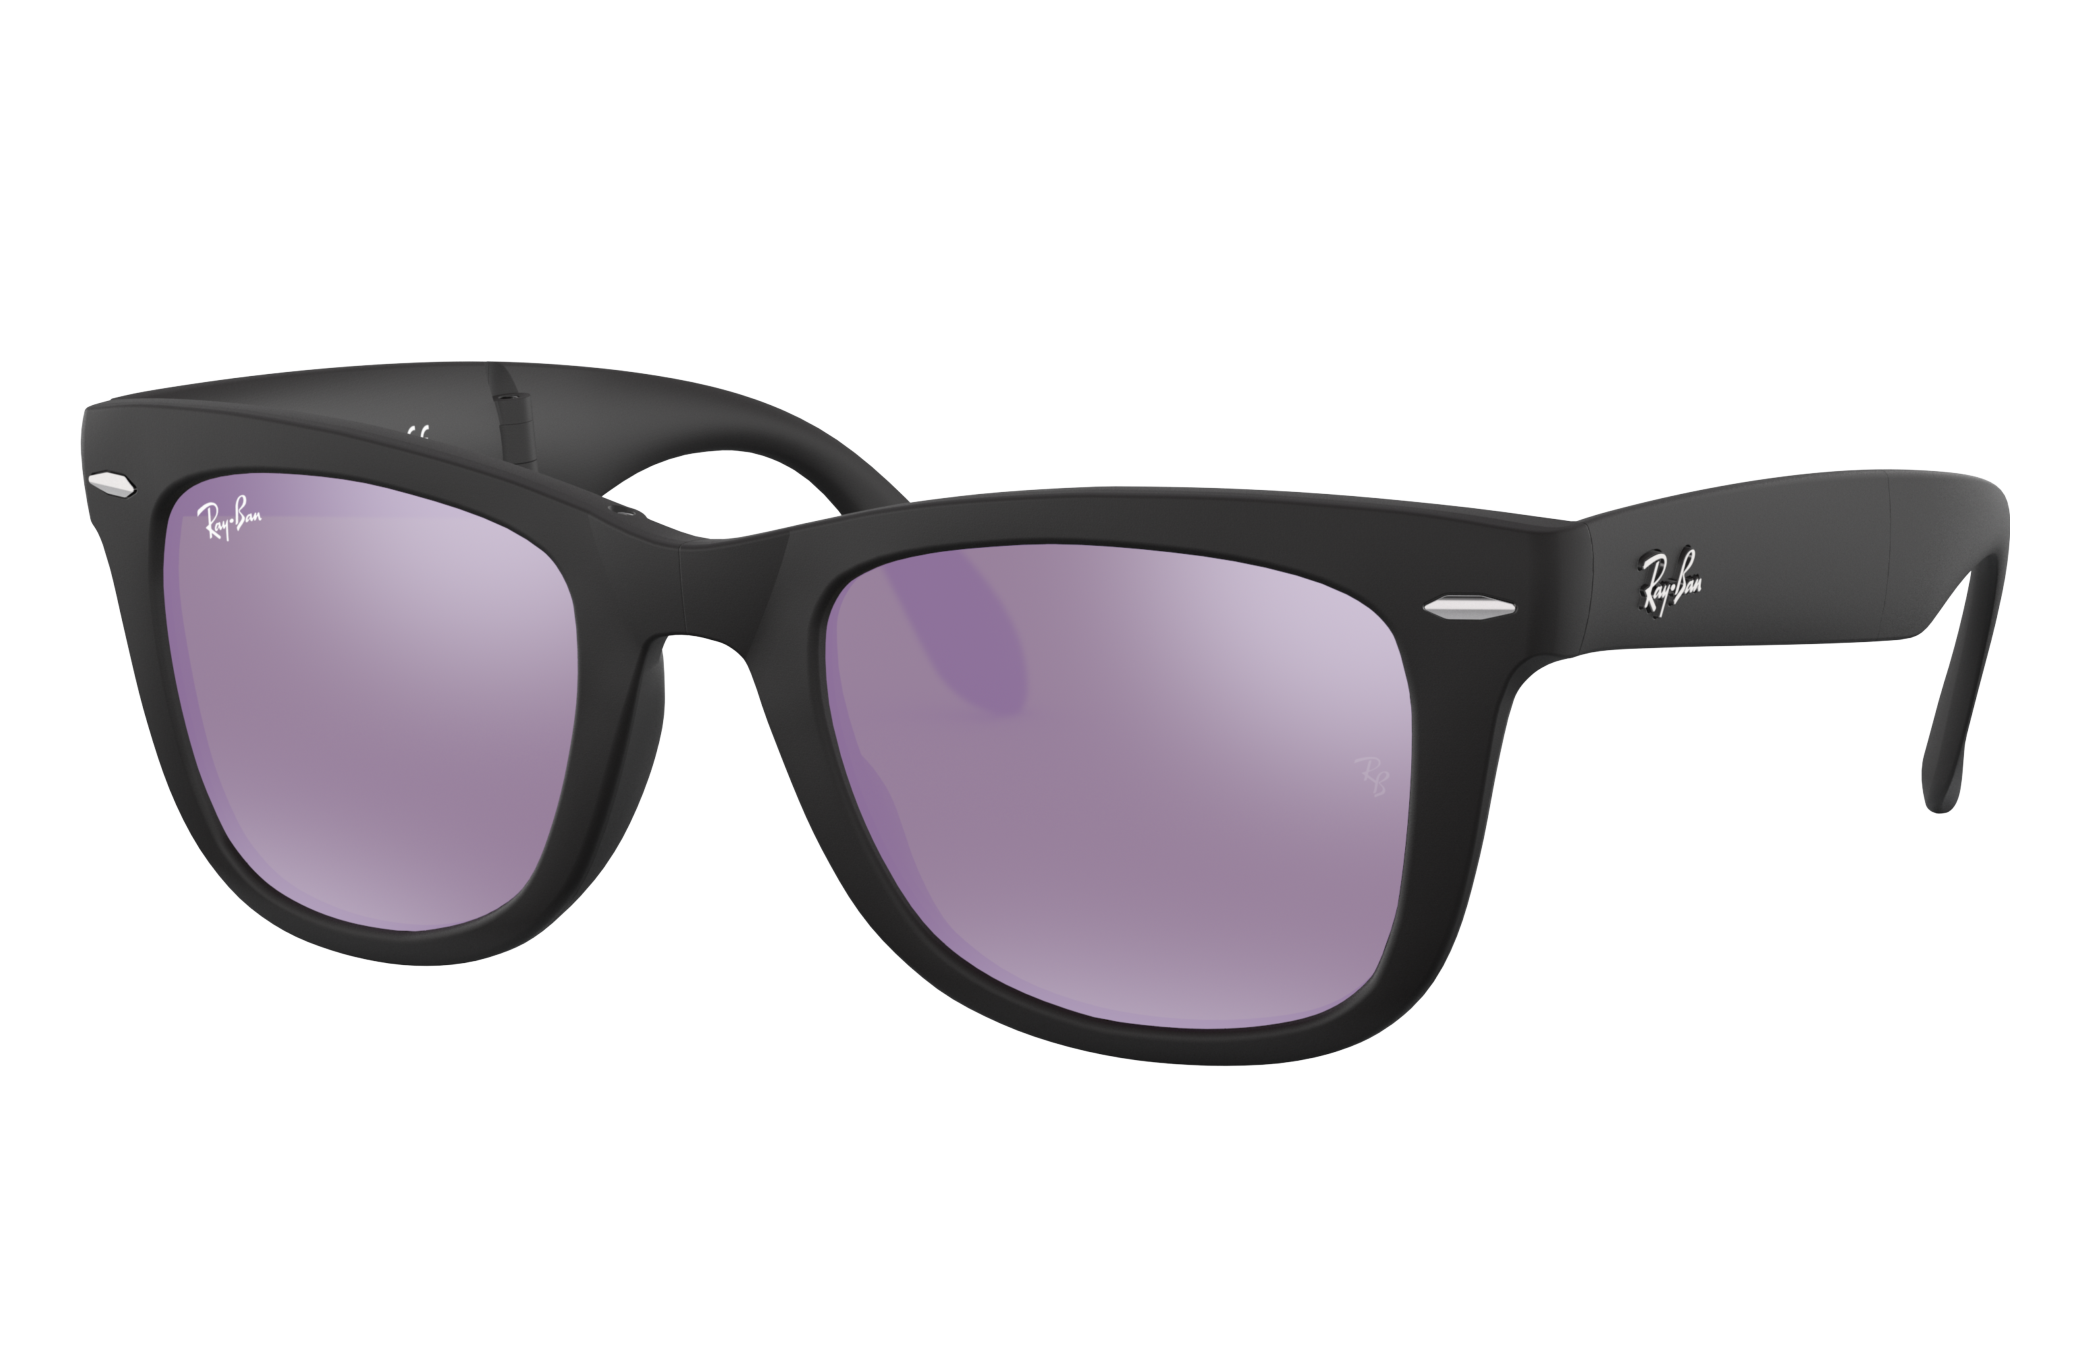 Arriba 66+ imagen ray ban sunglasses purple lens